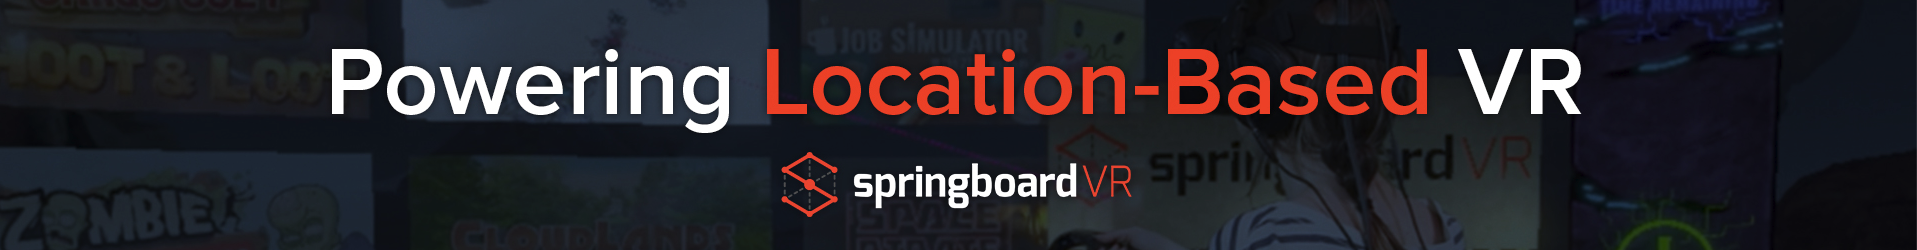 Springboard_logo-flat